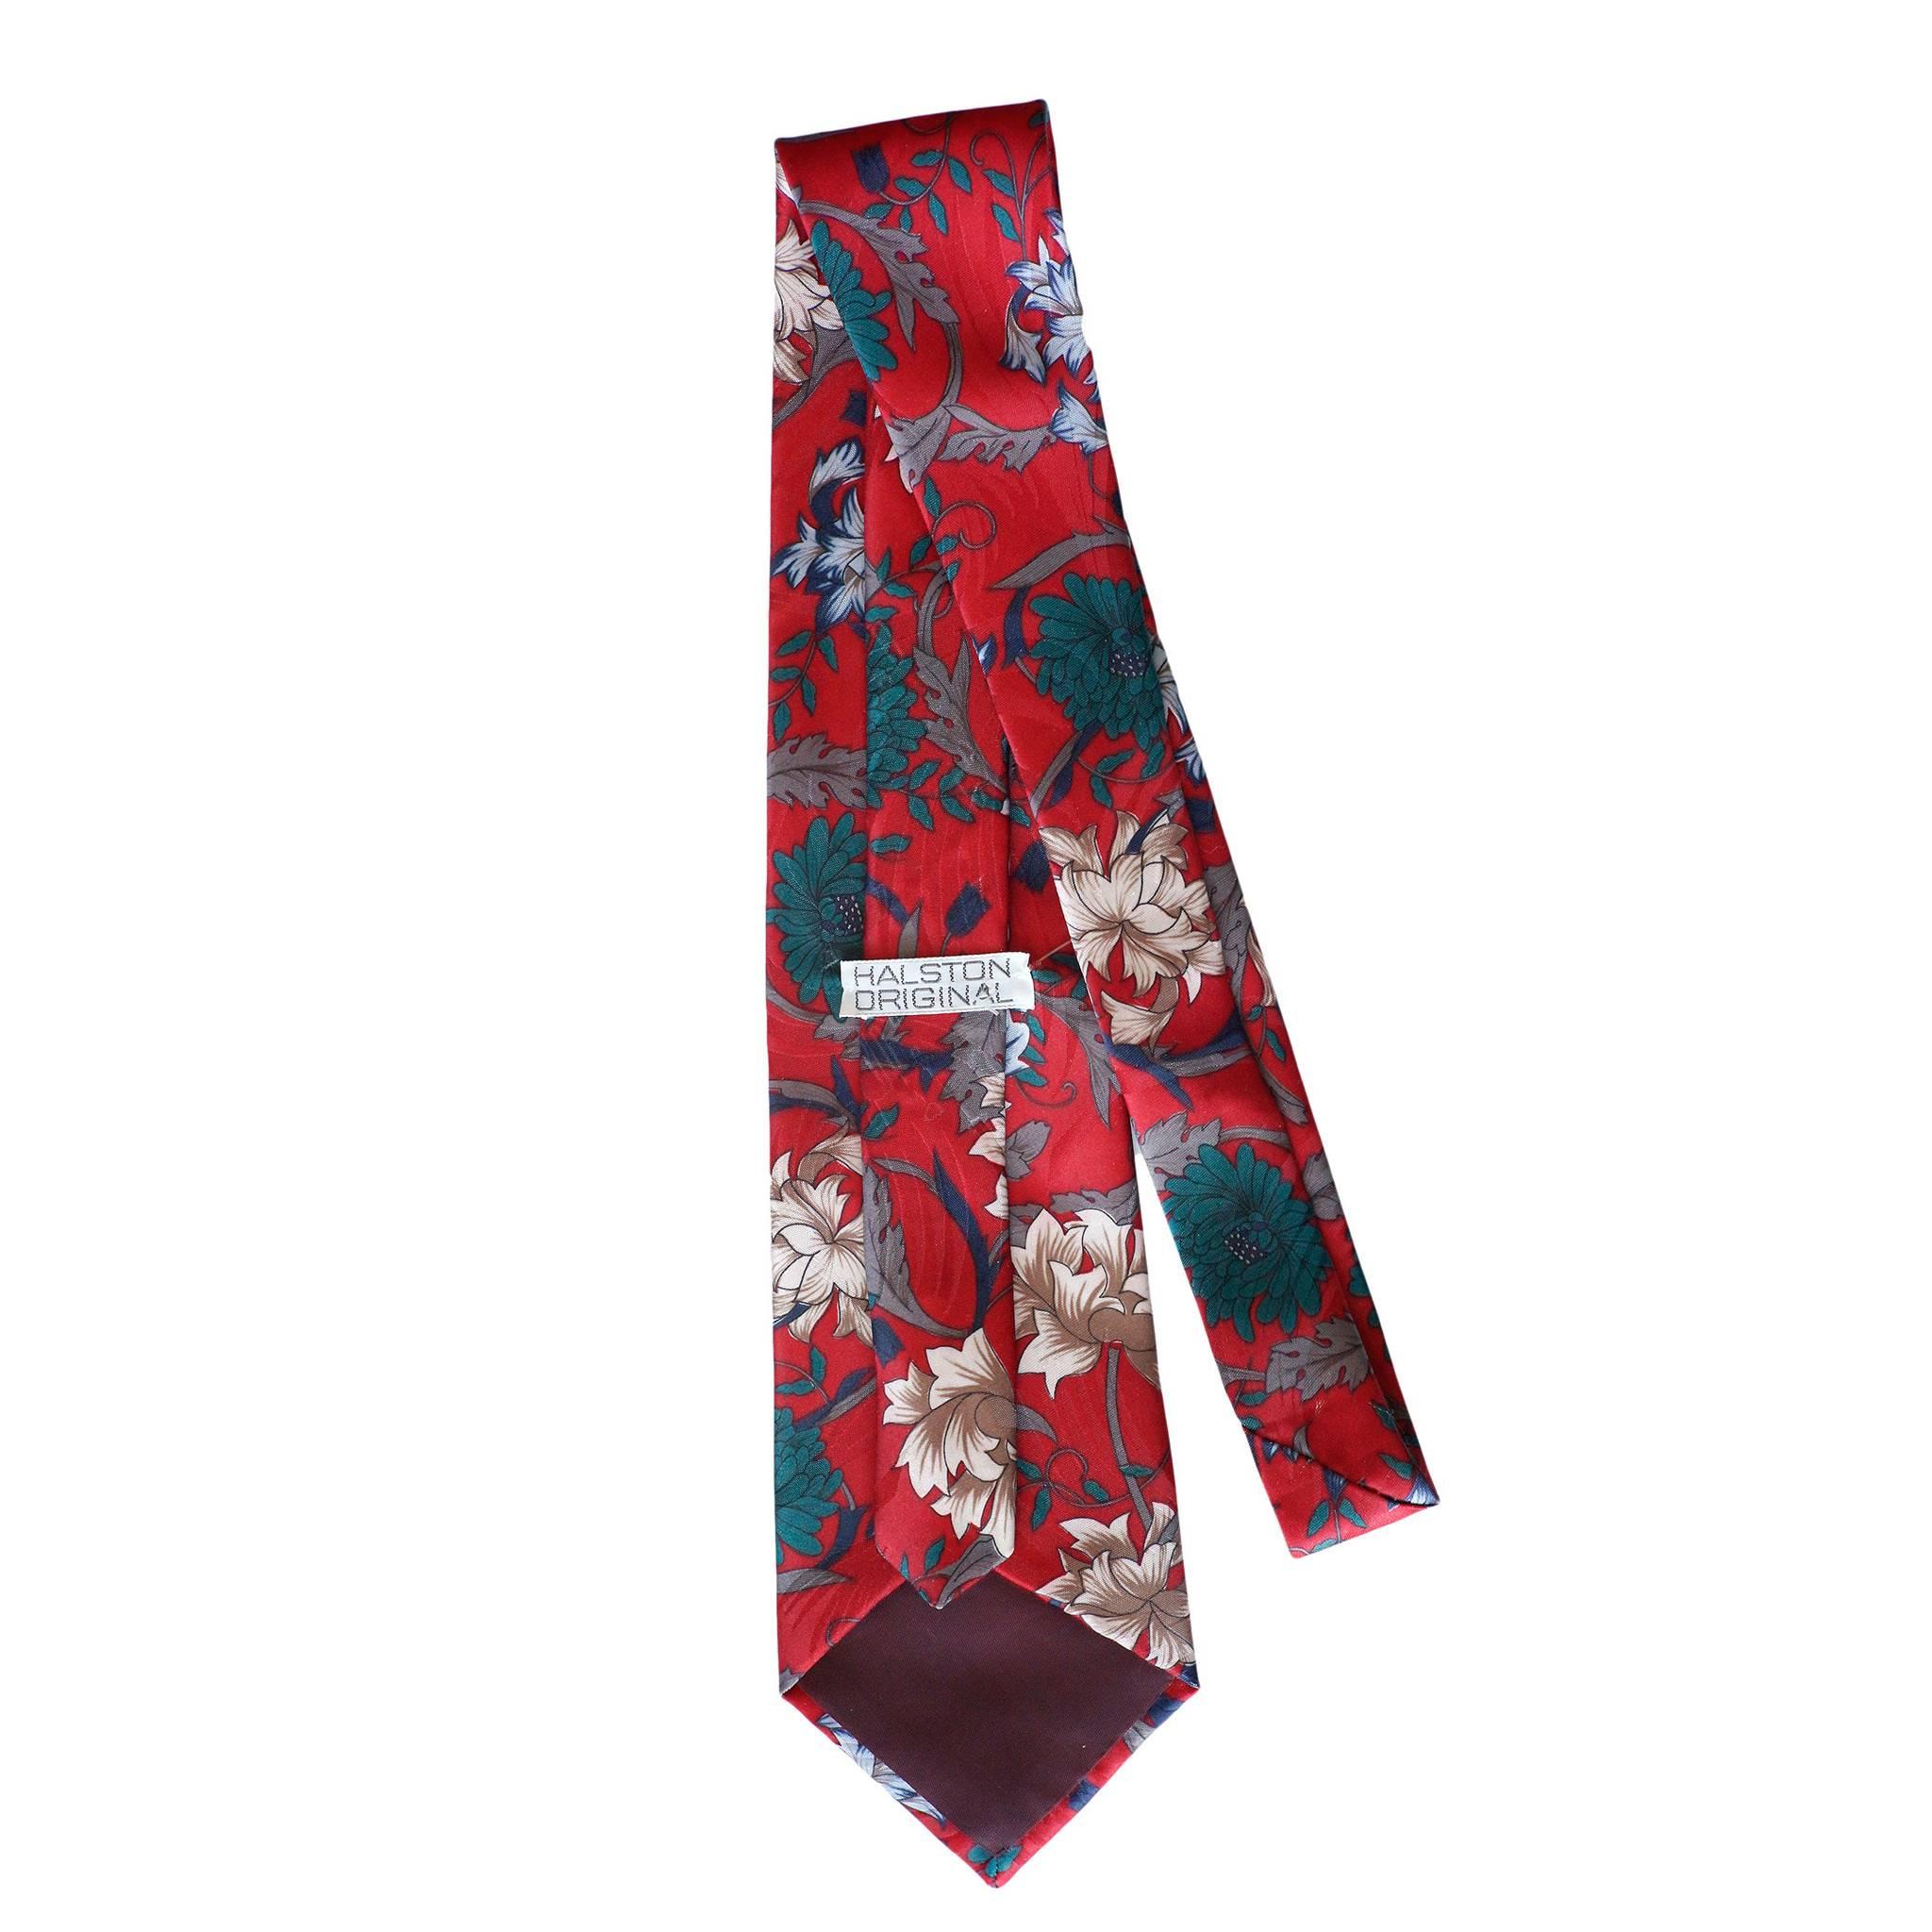 Original Halston red floral pattern tie. 

-Measurements-
length: 55